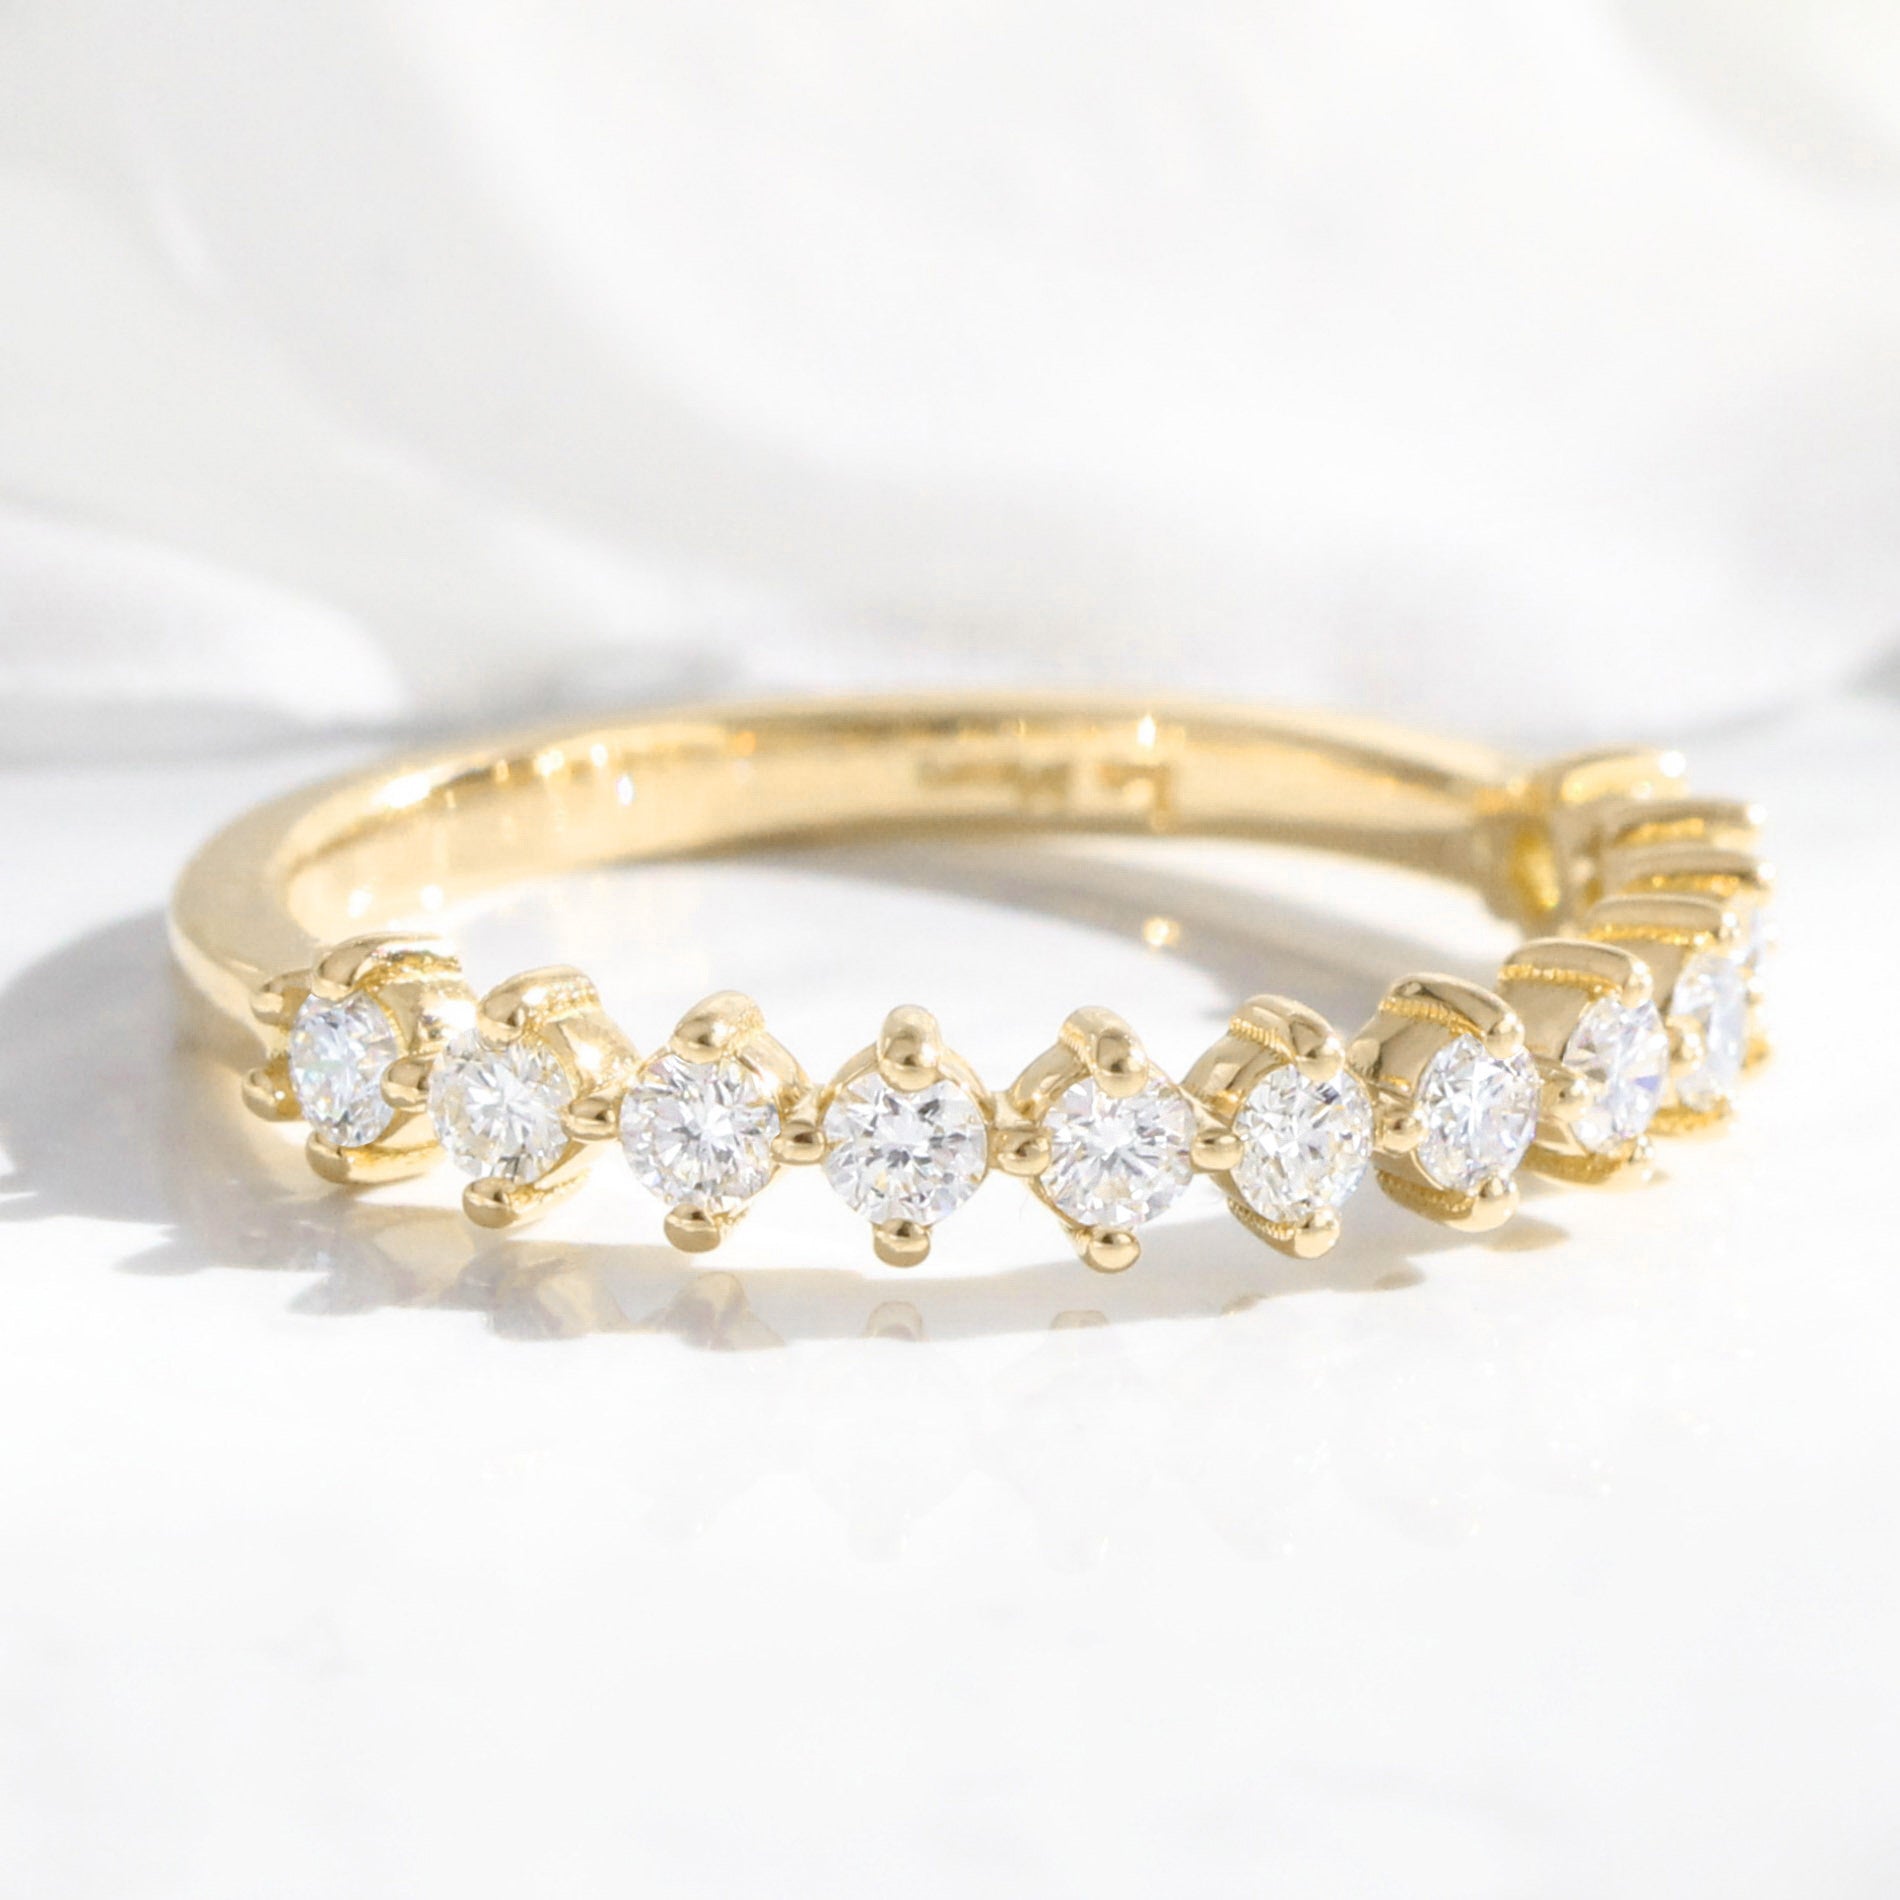 Large diamond wedding ring yellow gold 4 prong half eternity band la more design jewelry